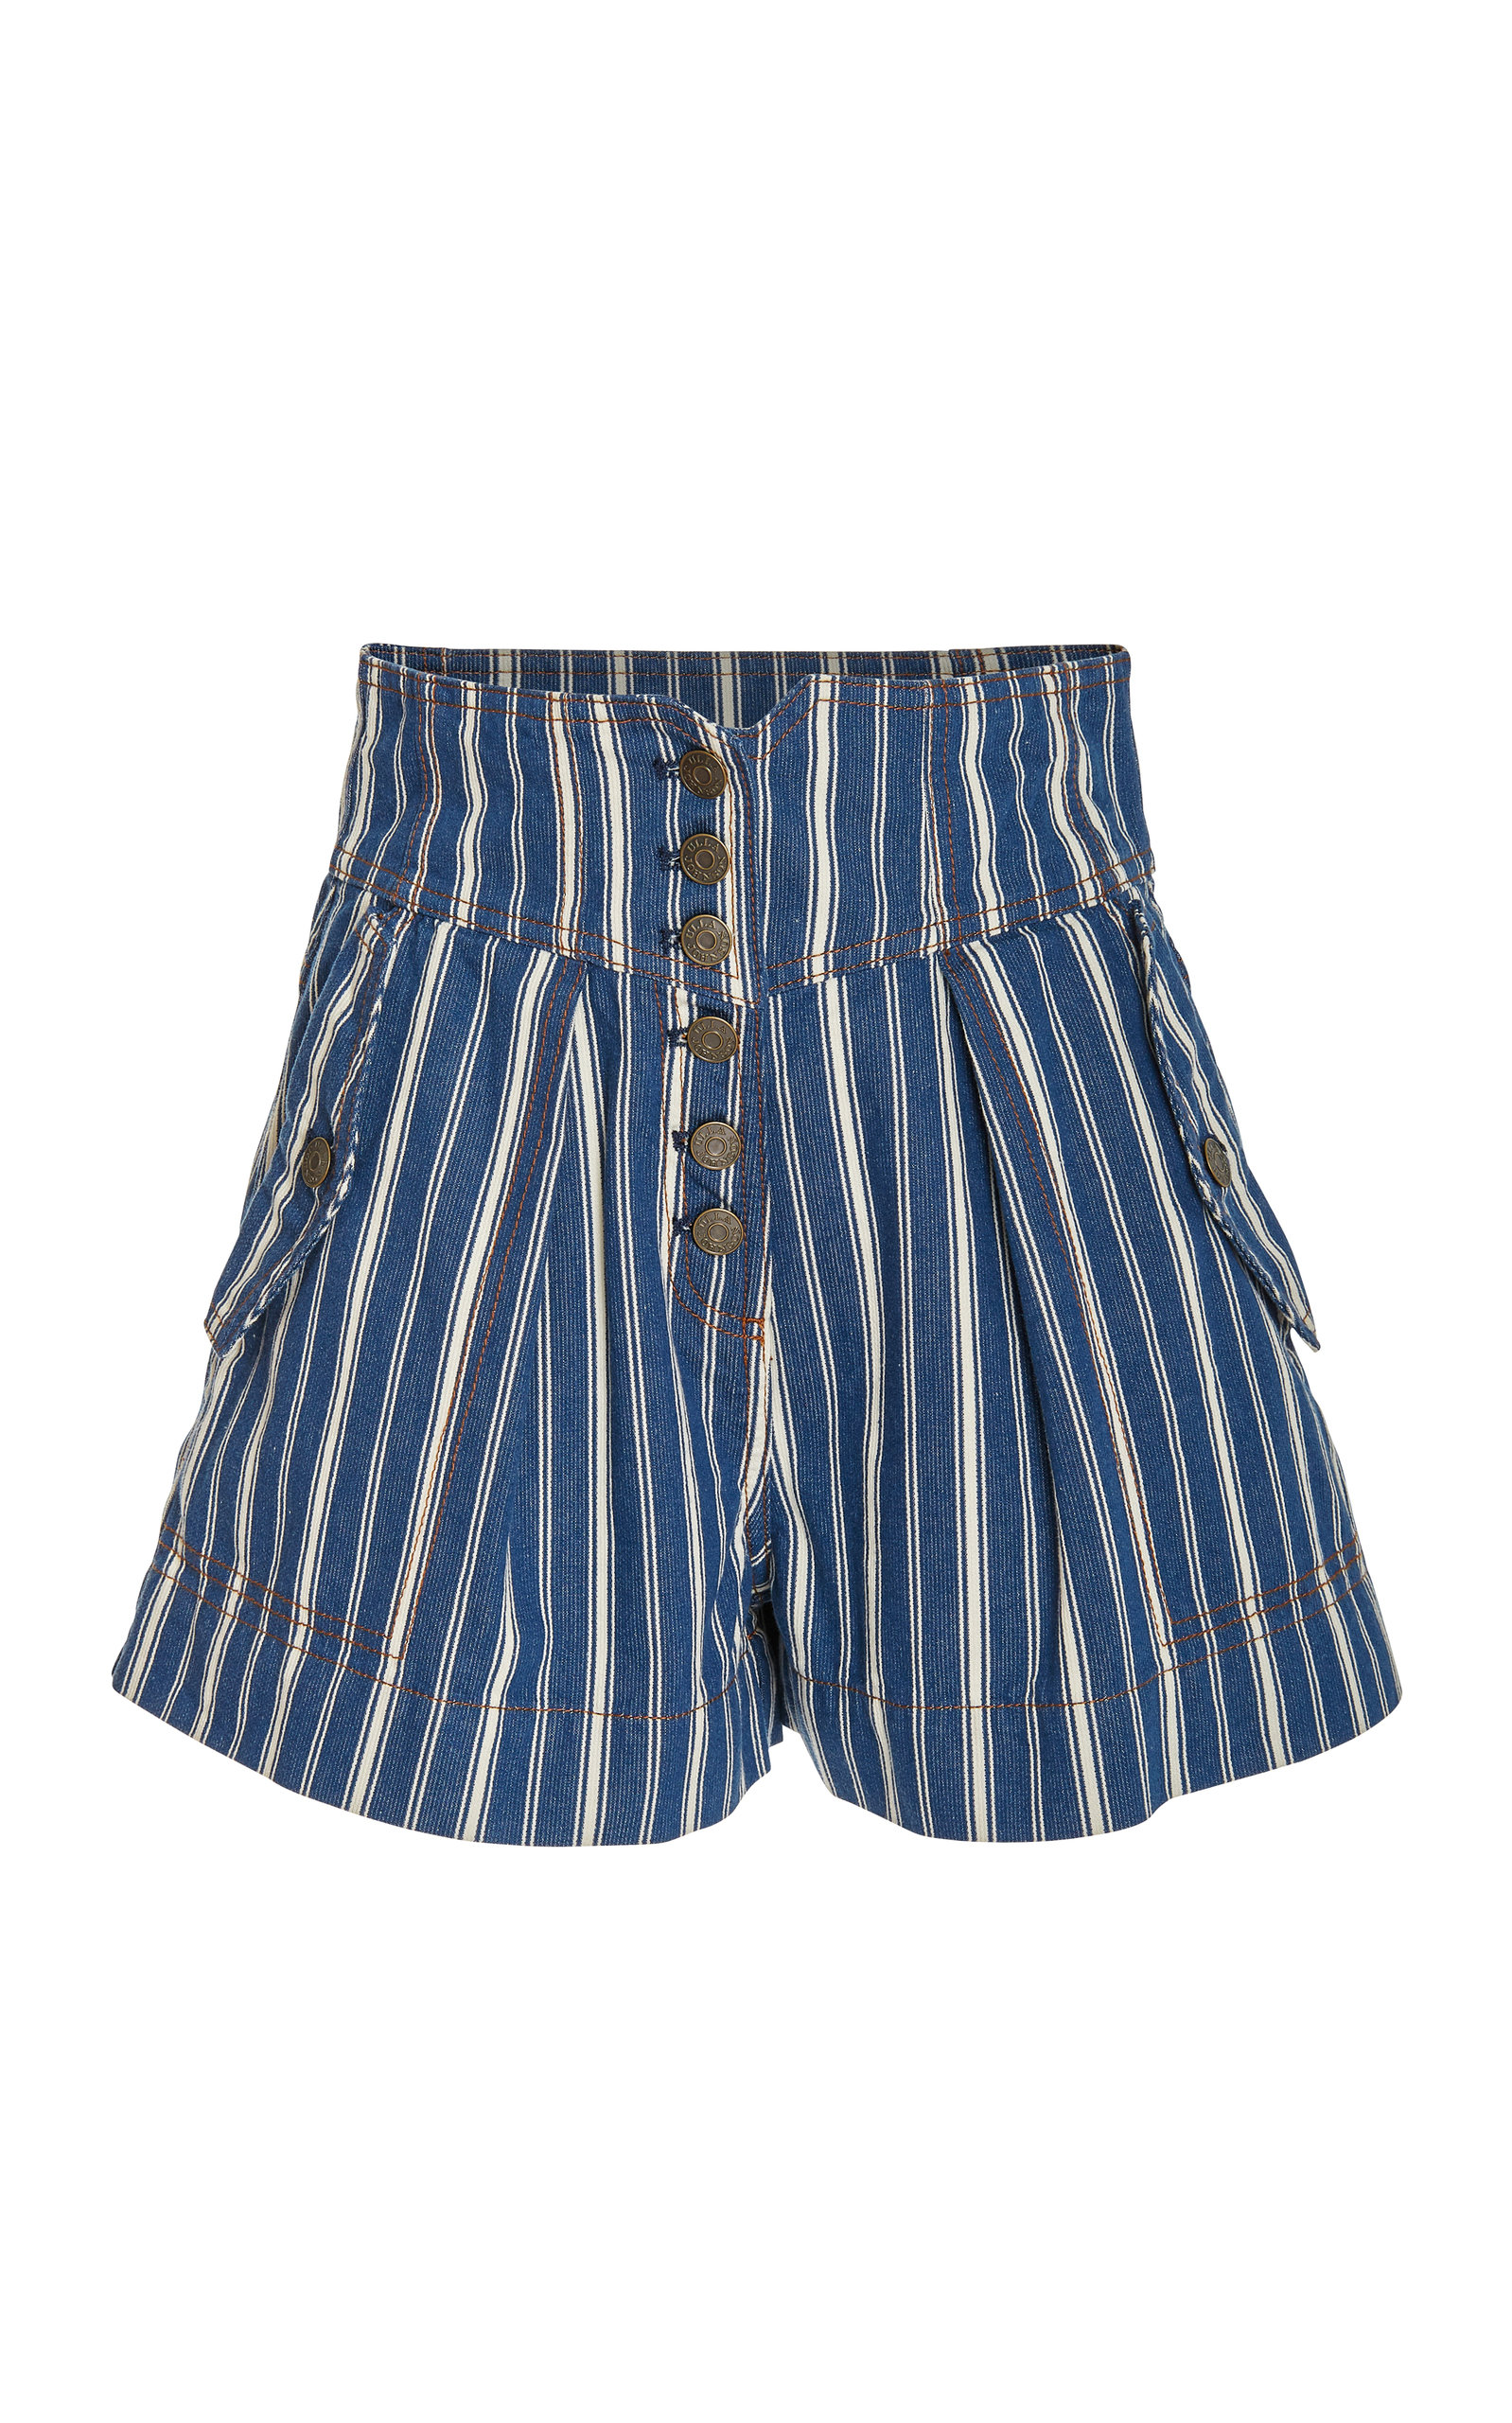 Ulla Johnson Women's Alvin Cotton Mini Shorts